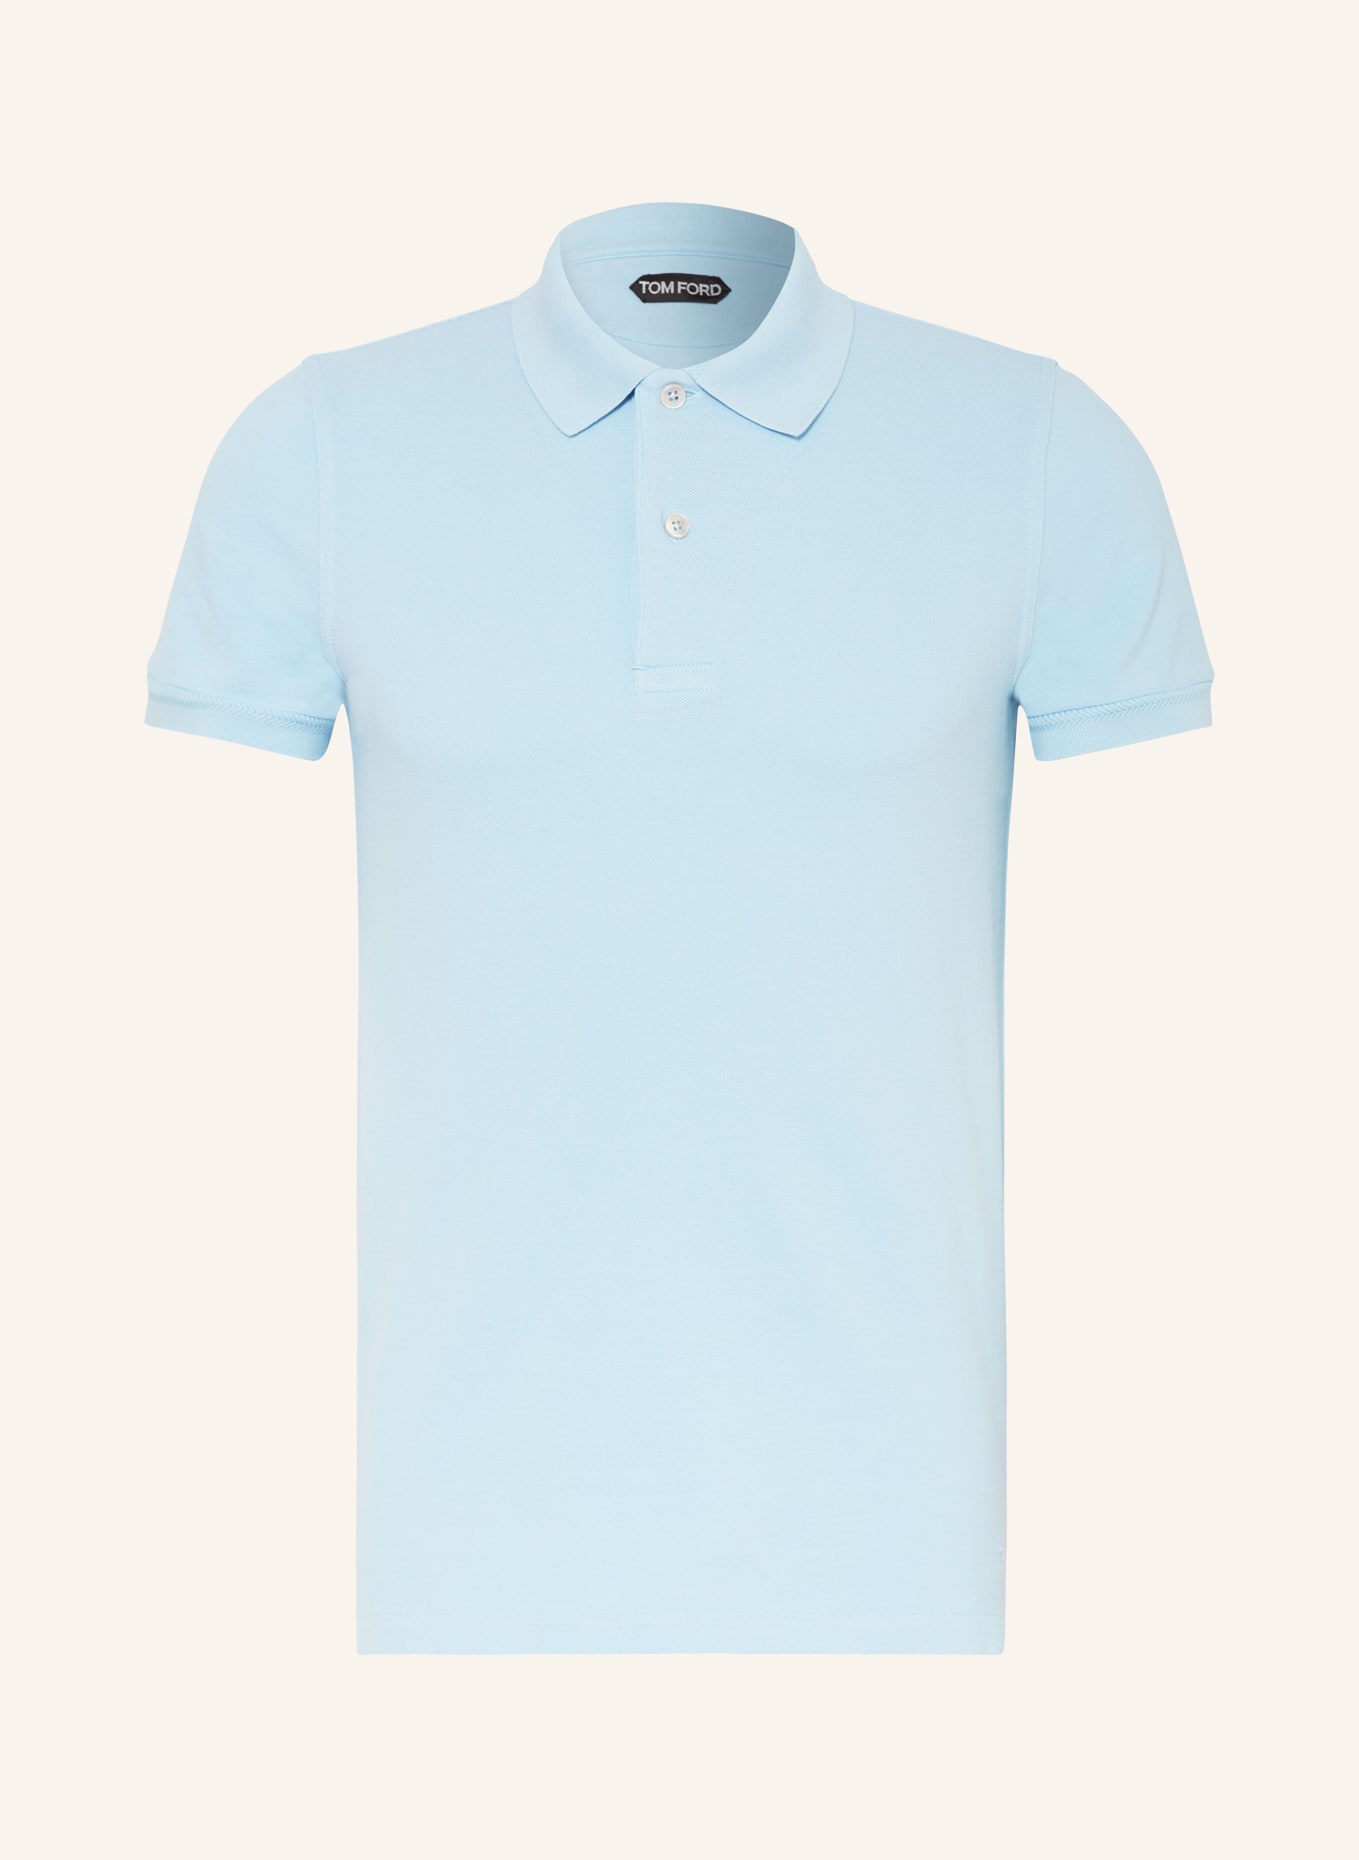 TOM FORD Piqué-Poloshirt, Farbe: HELLBLAU (Bild 1)